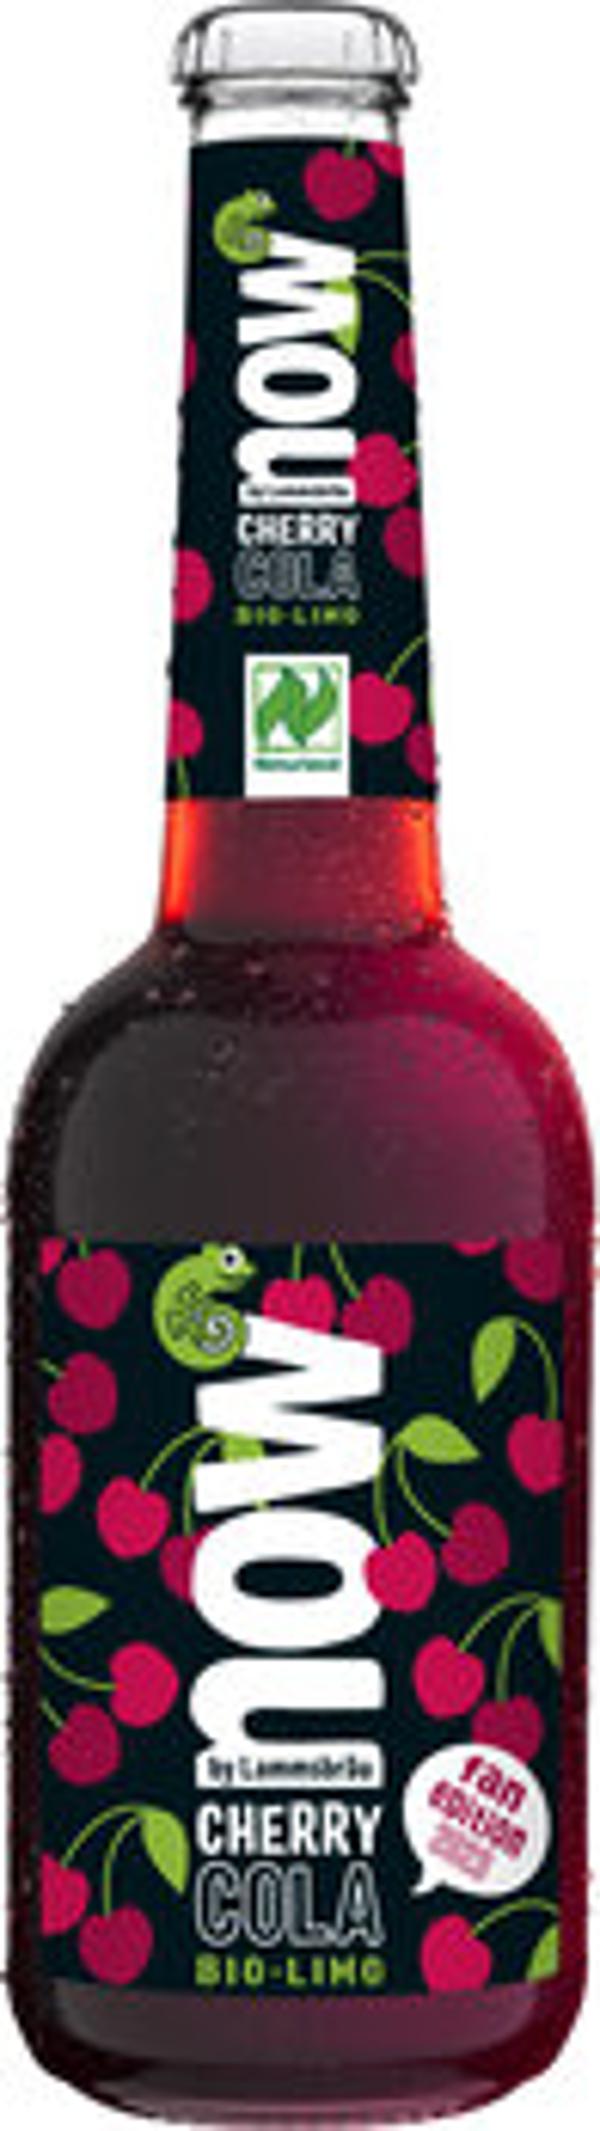 Produktfoto zu now Cherry Cola 0,33l